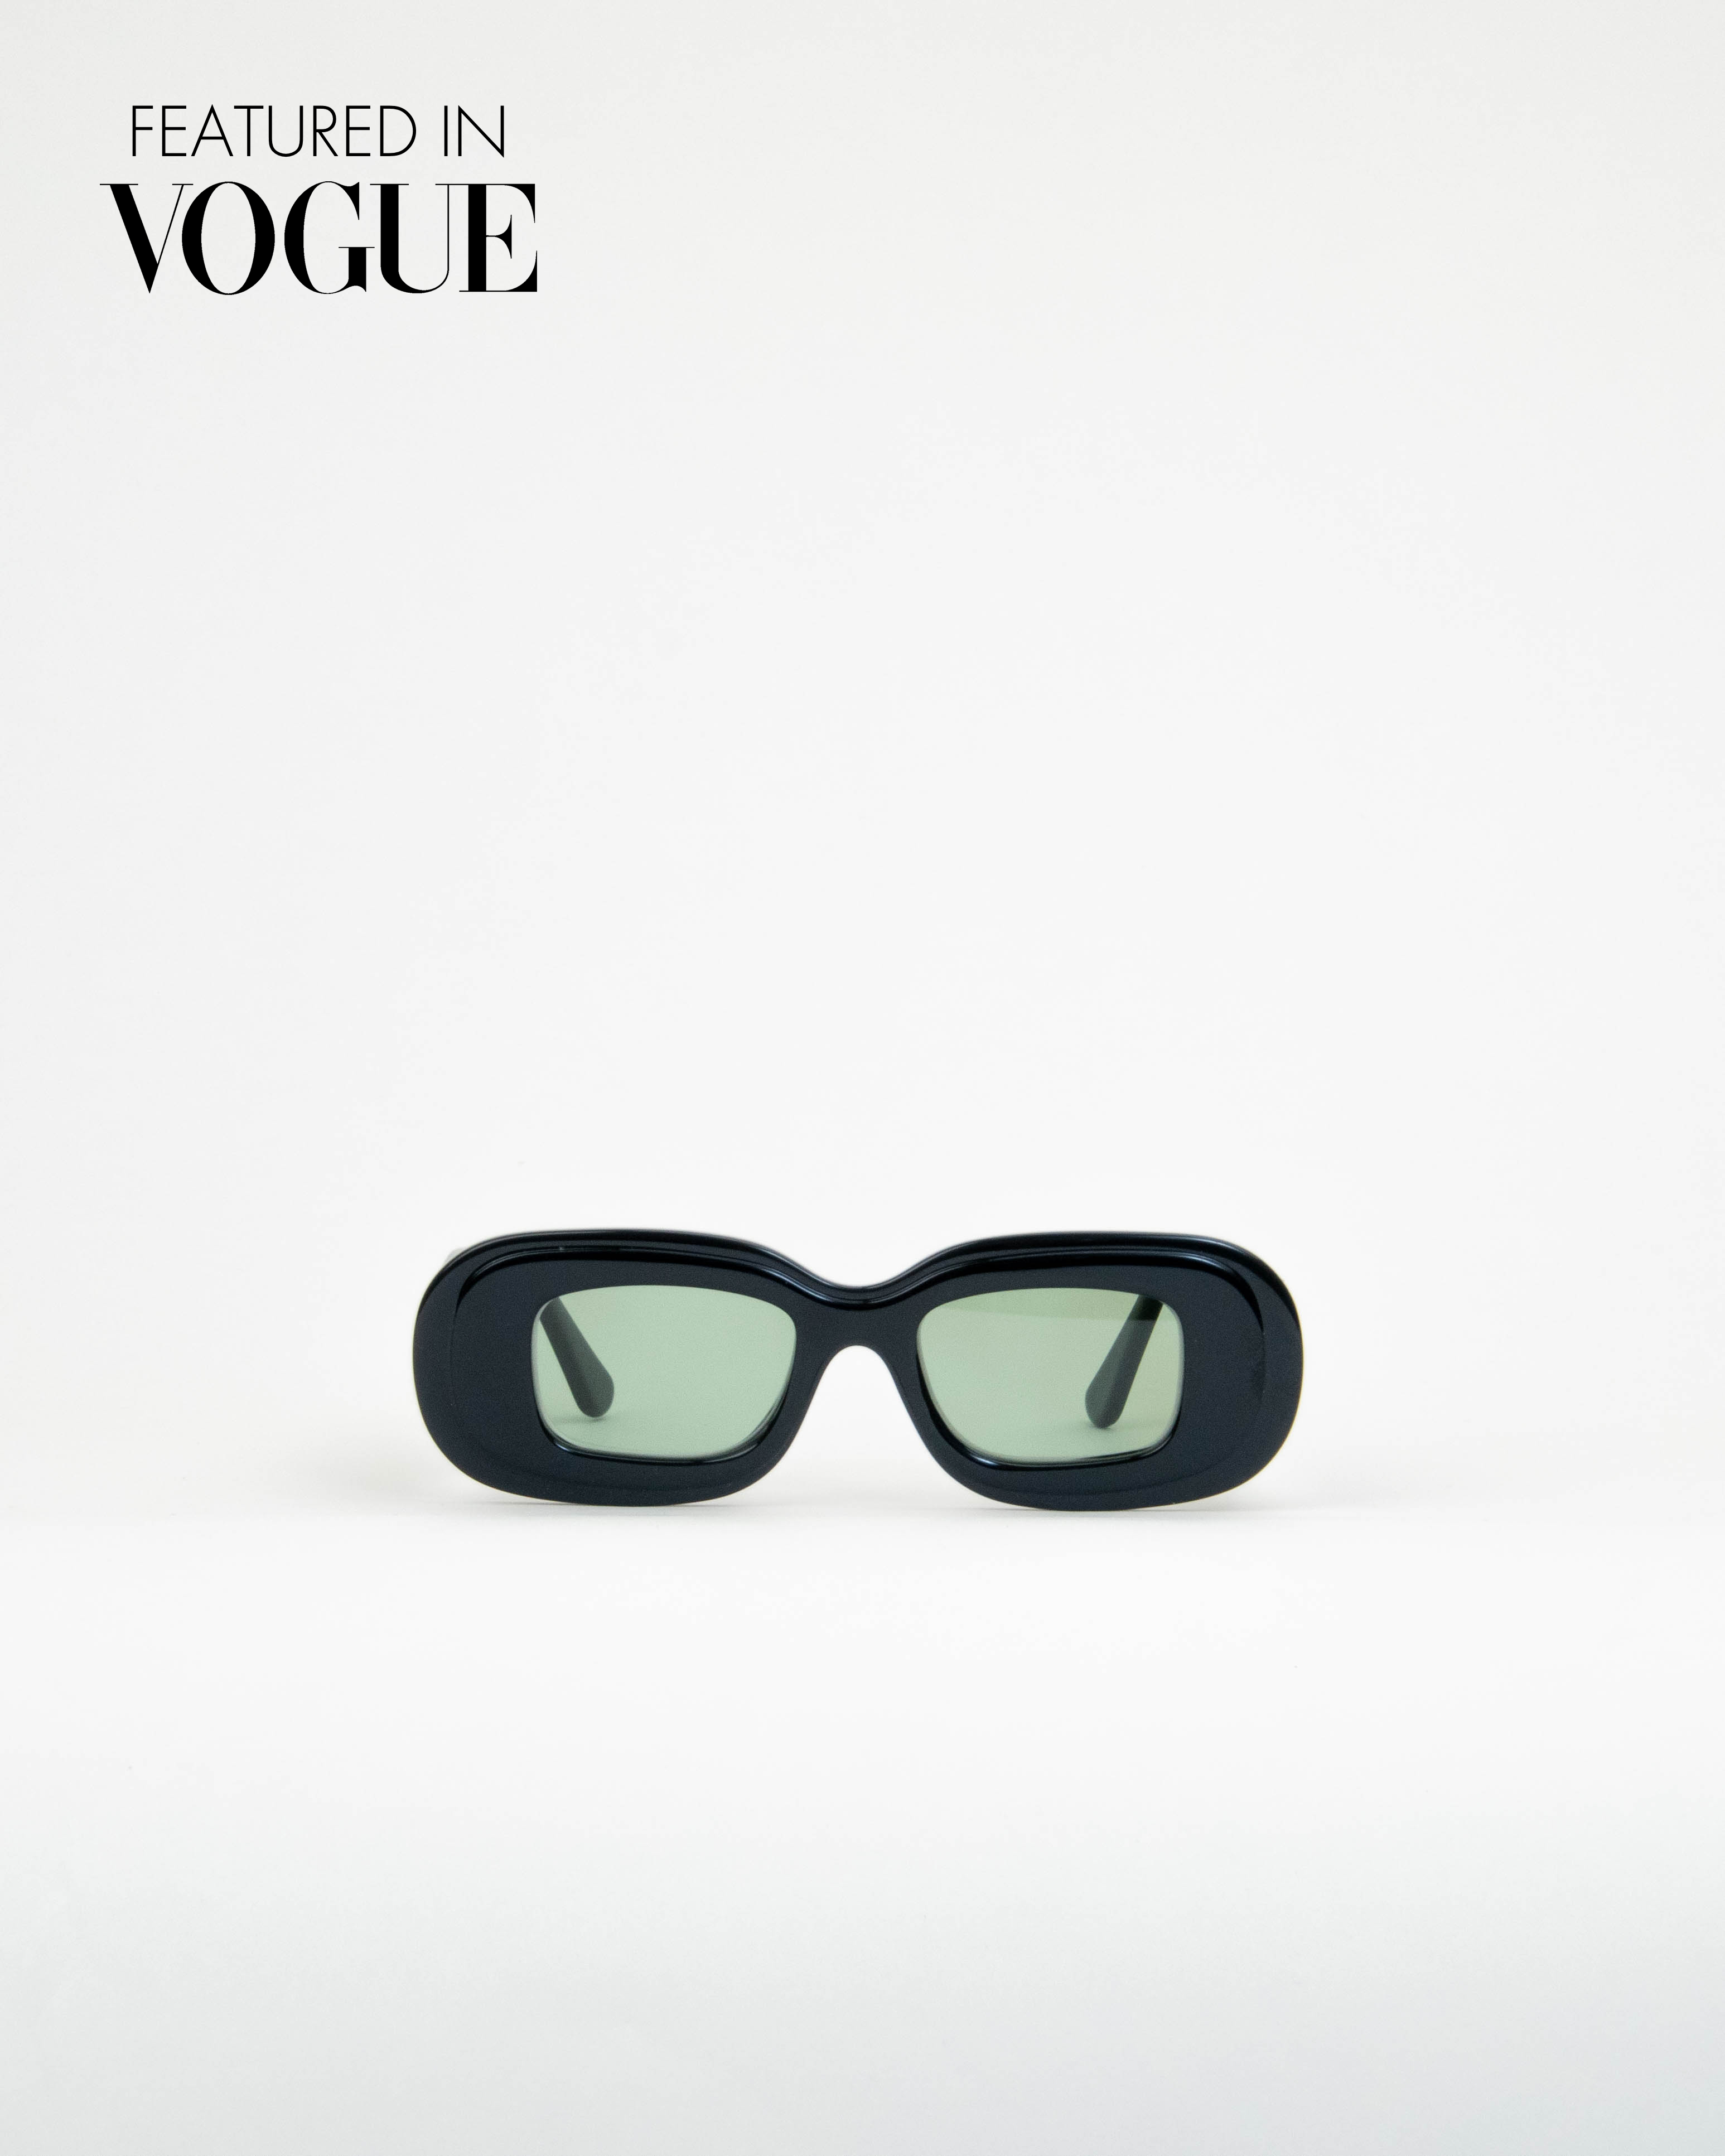 Vision Onyx oval Sunglasses